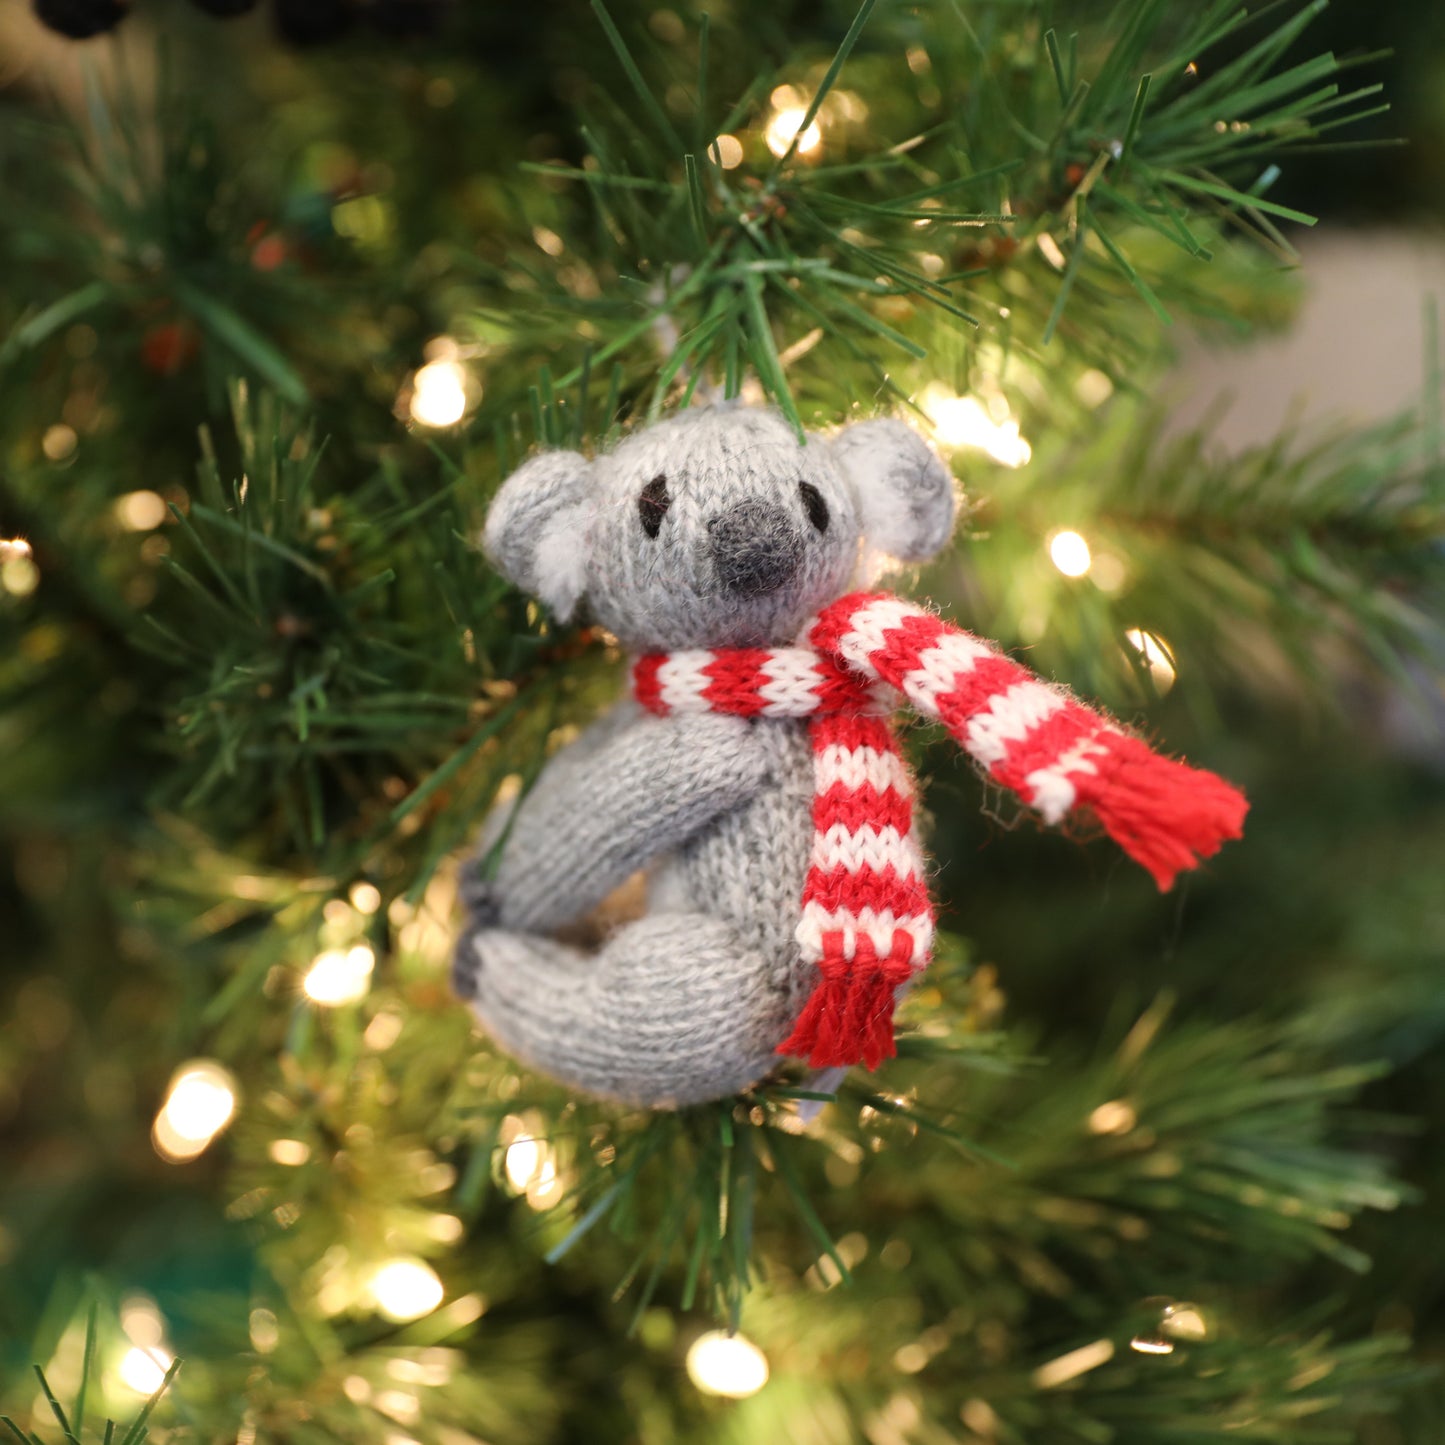 Koala Knit Ornament